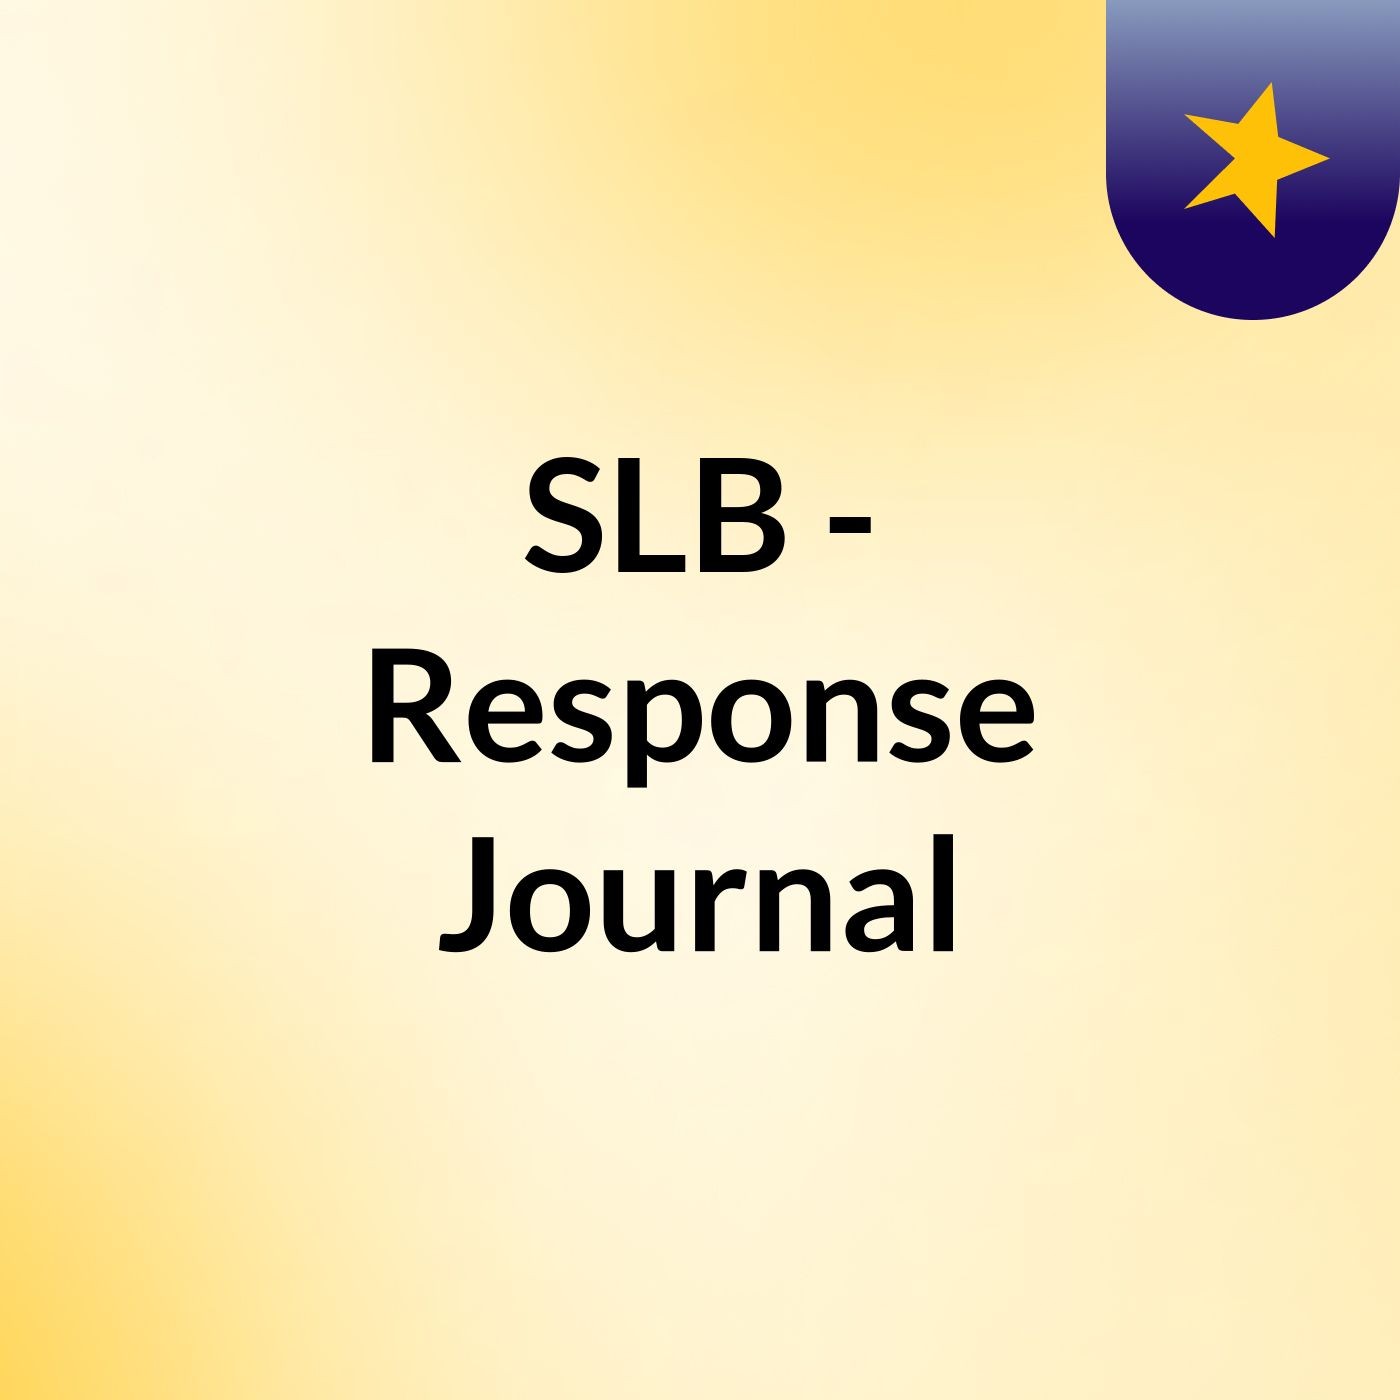 SLB - Response Journal